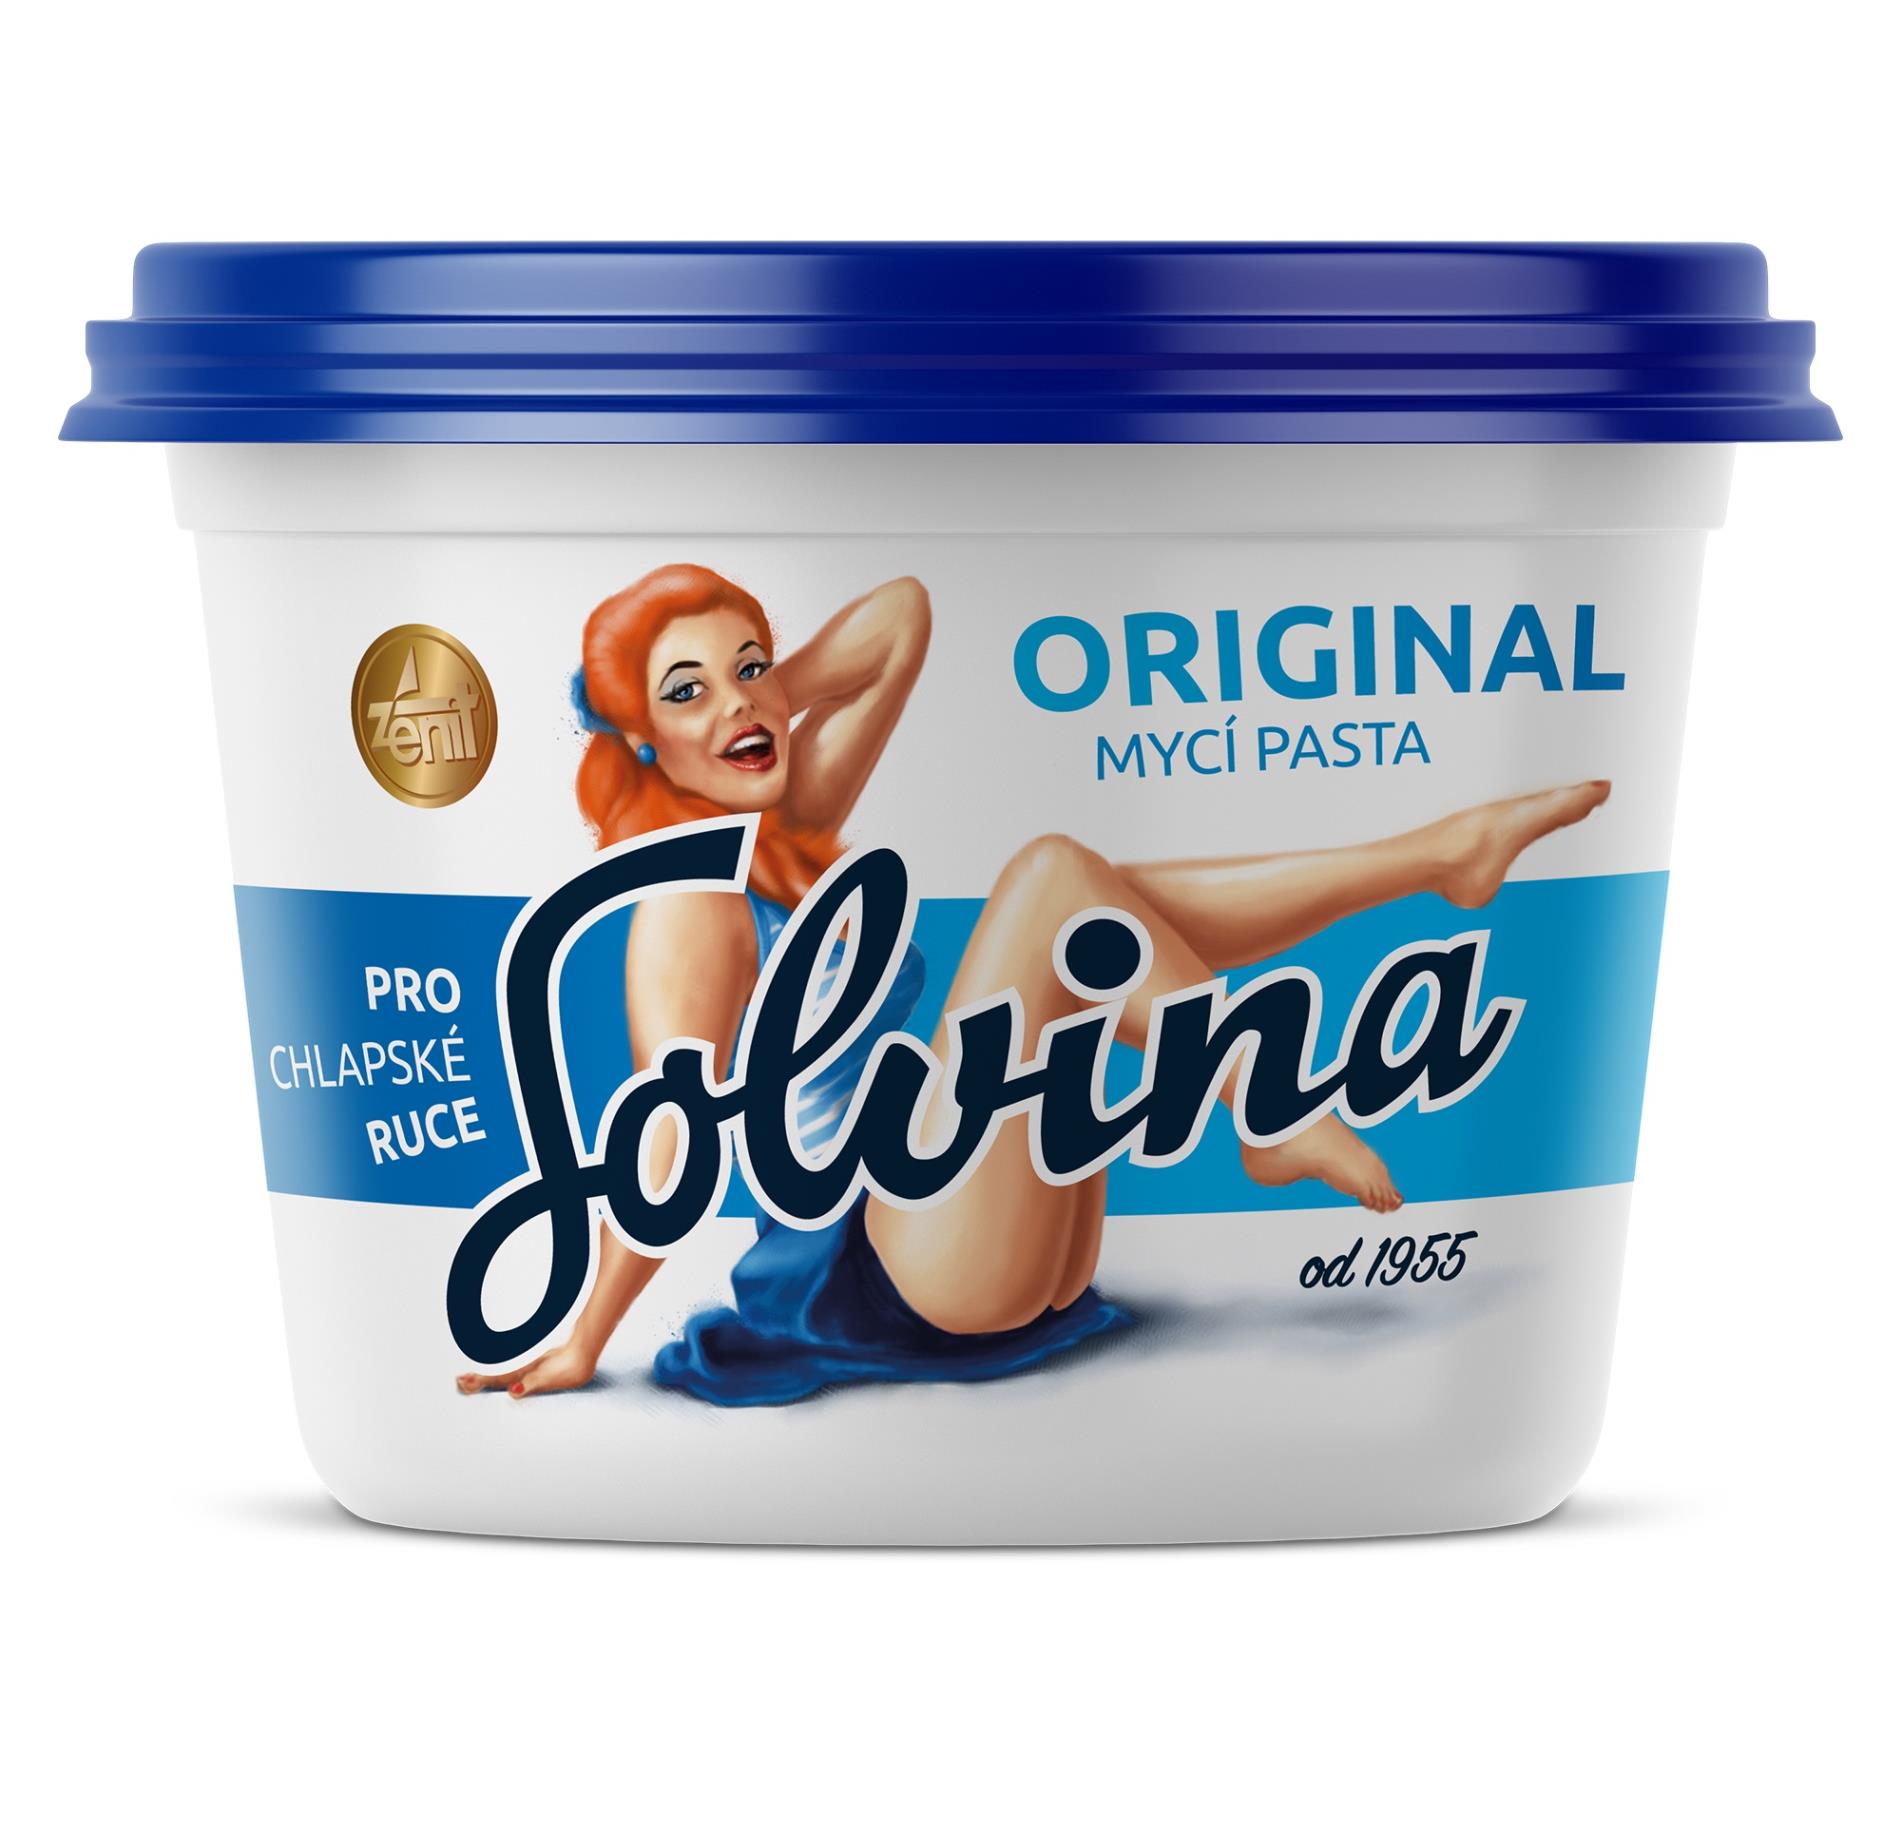 Mycí pasta Solvina - originál, 320 g